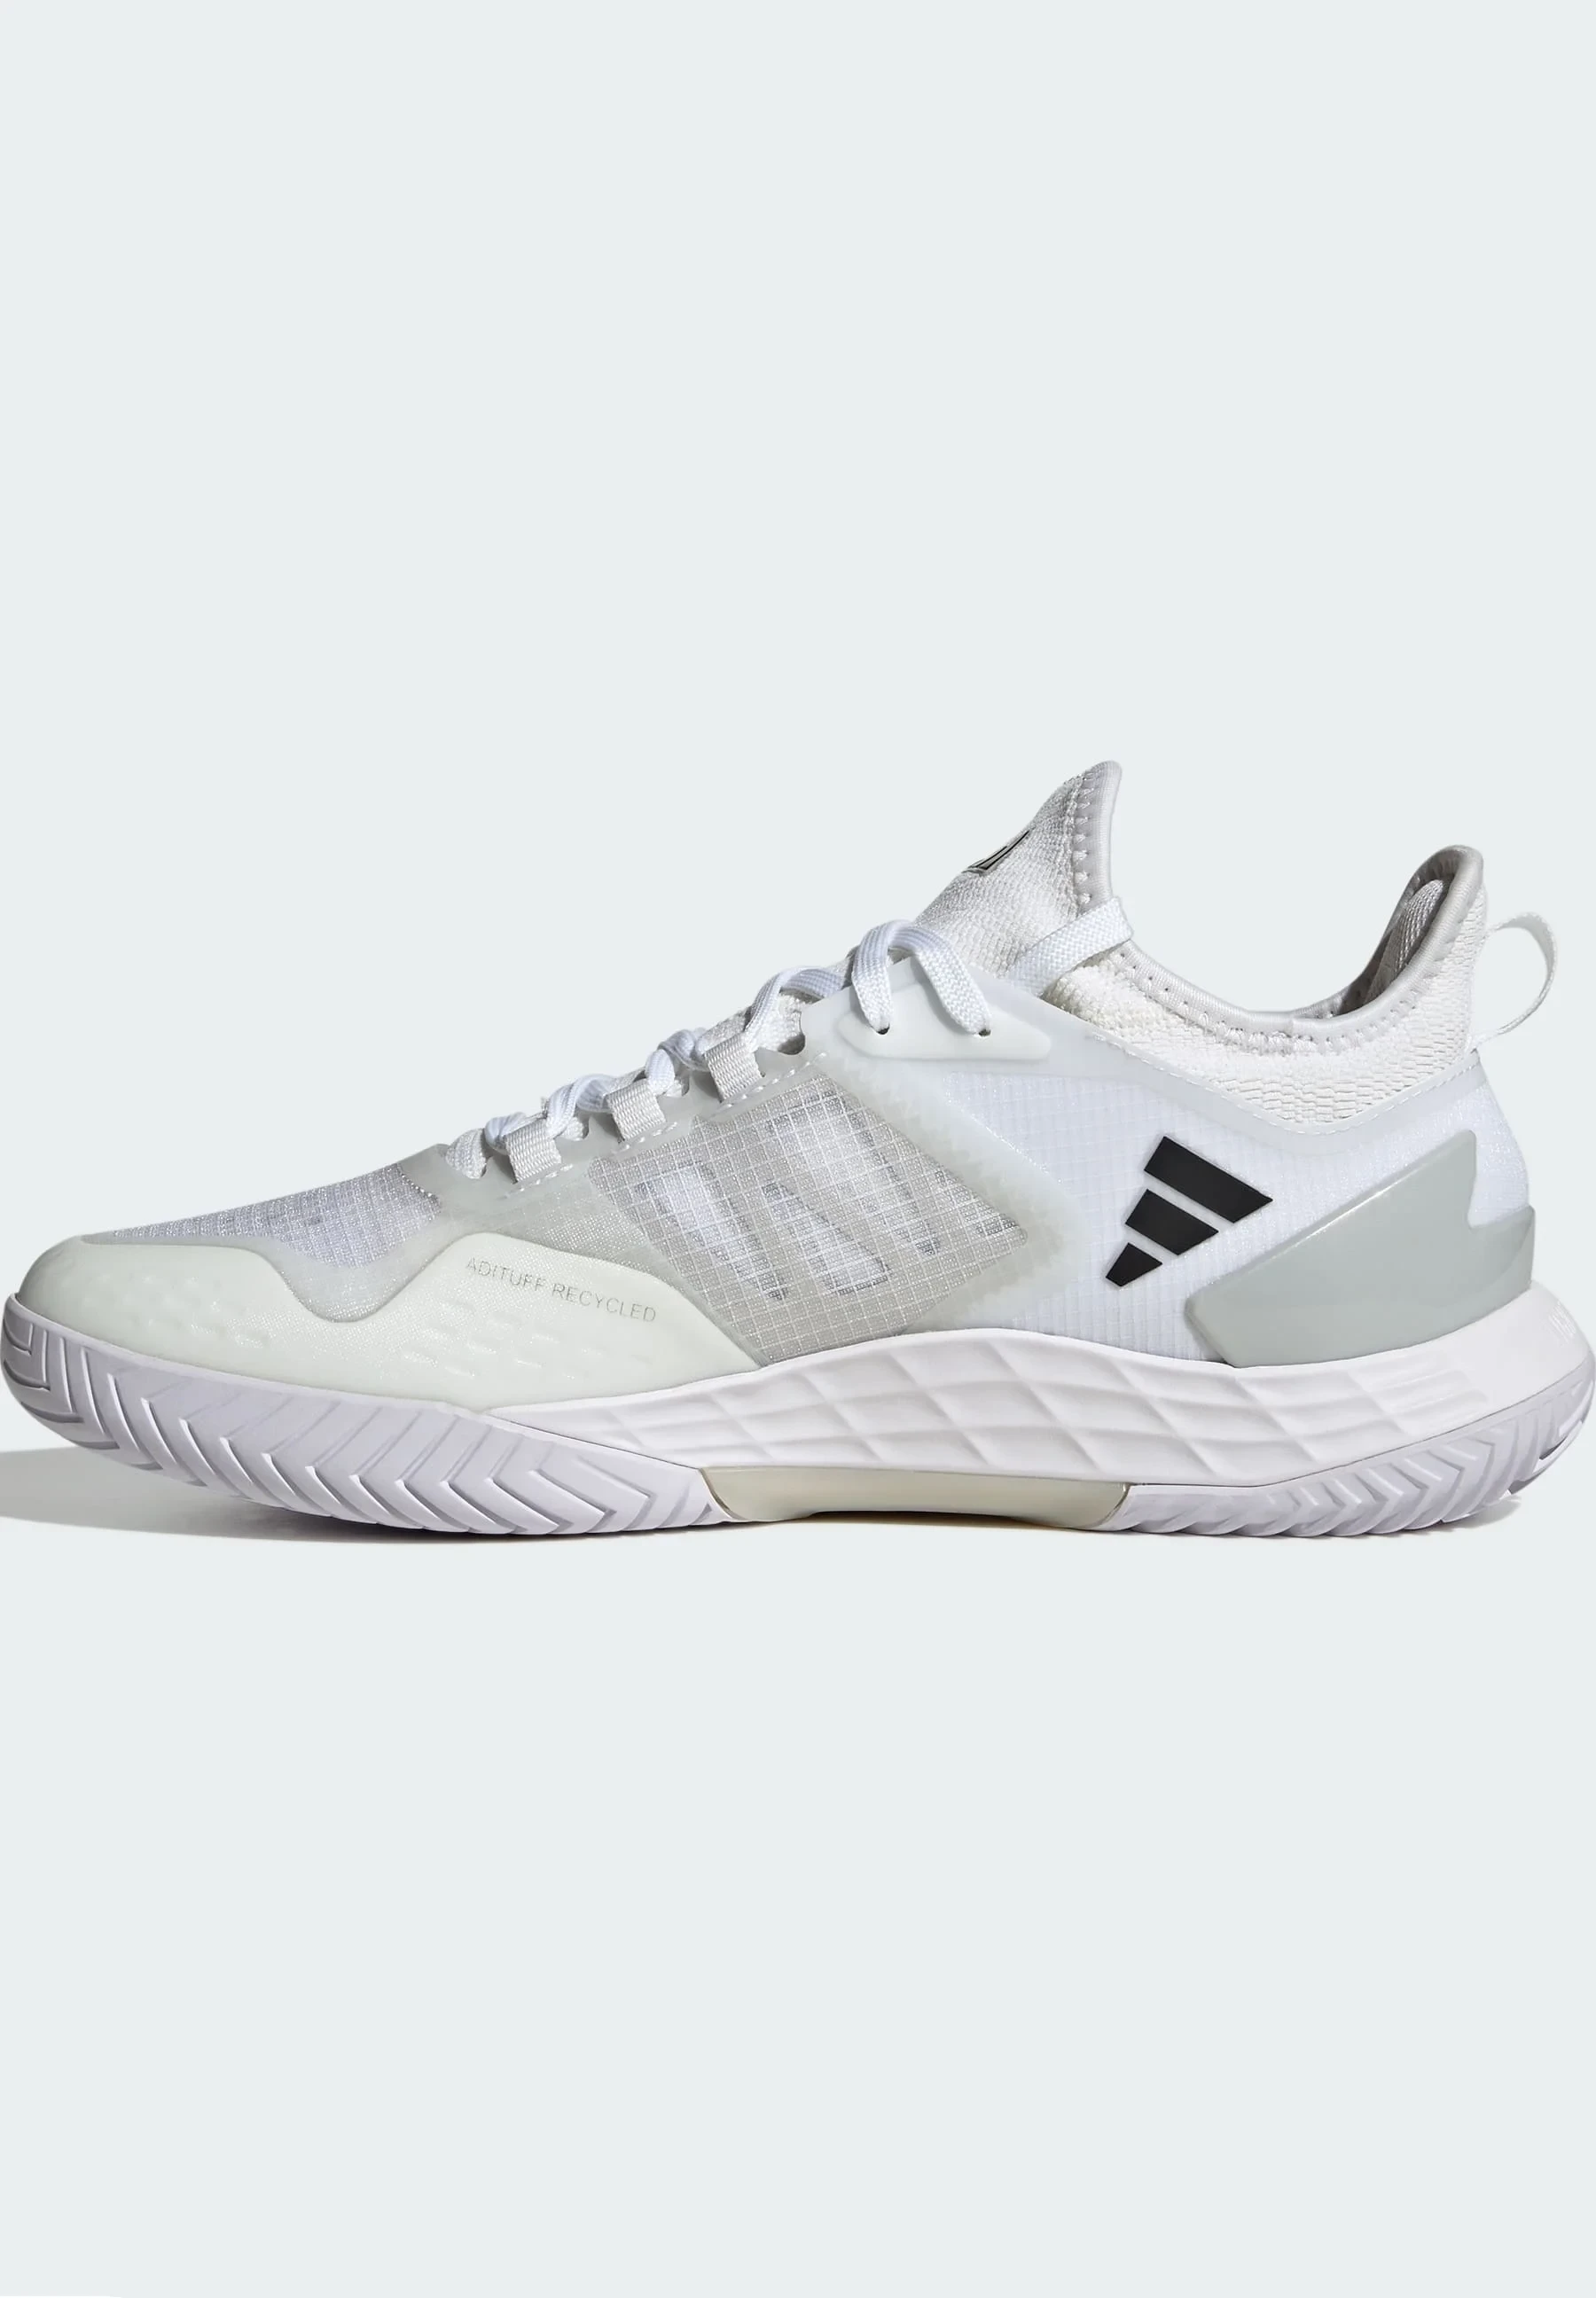 Adidas Adizero Ubersonic 4.1 CL M blanc